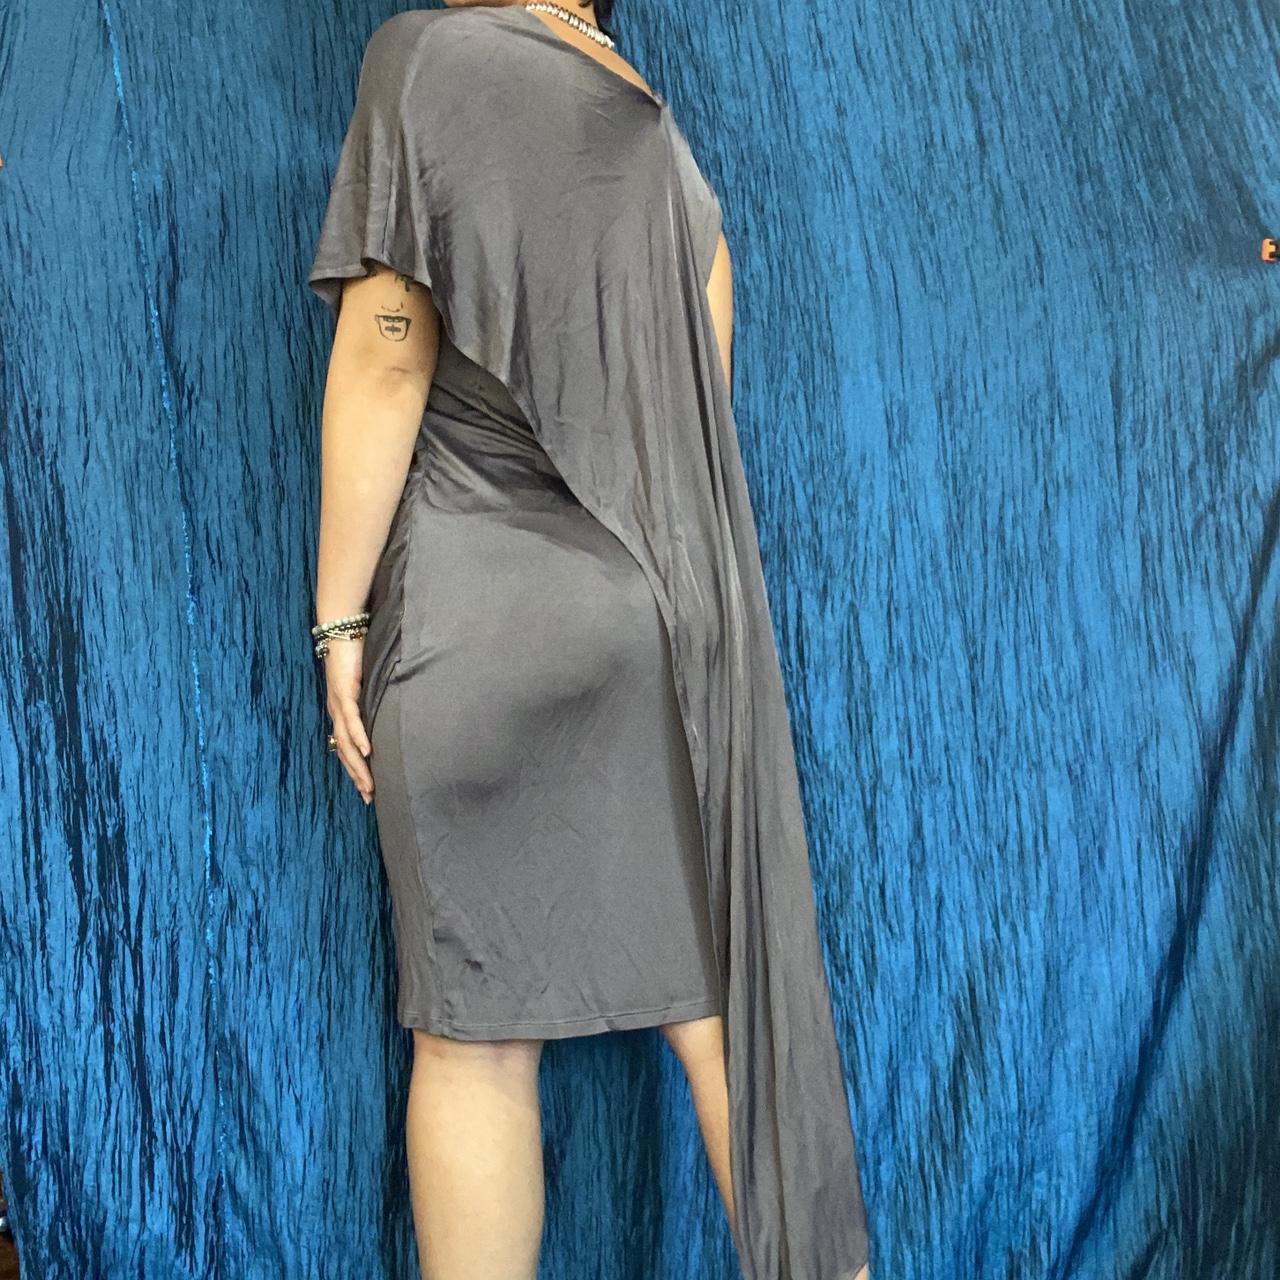 McQ Alexander McQueen Women's Silver and Grey Dress